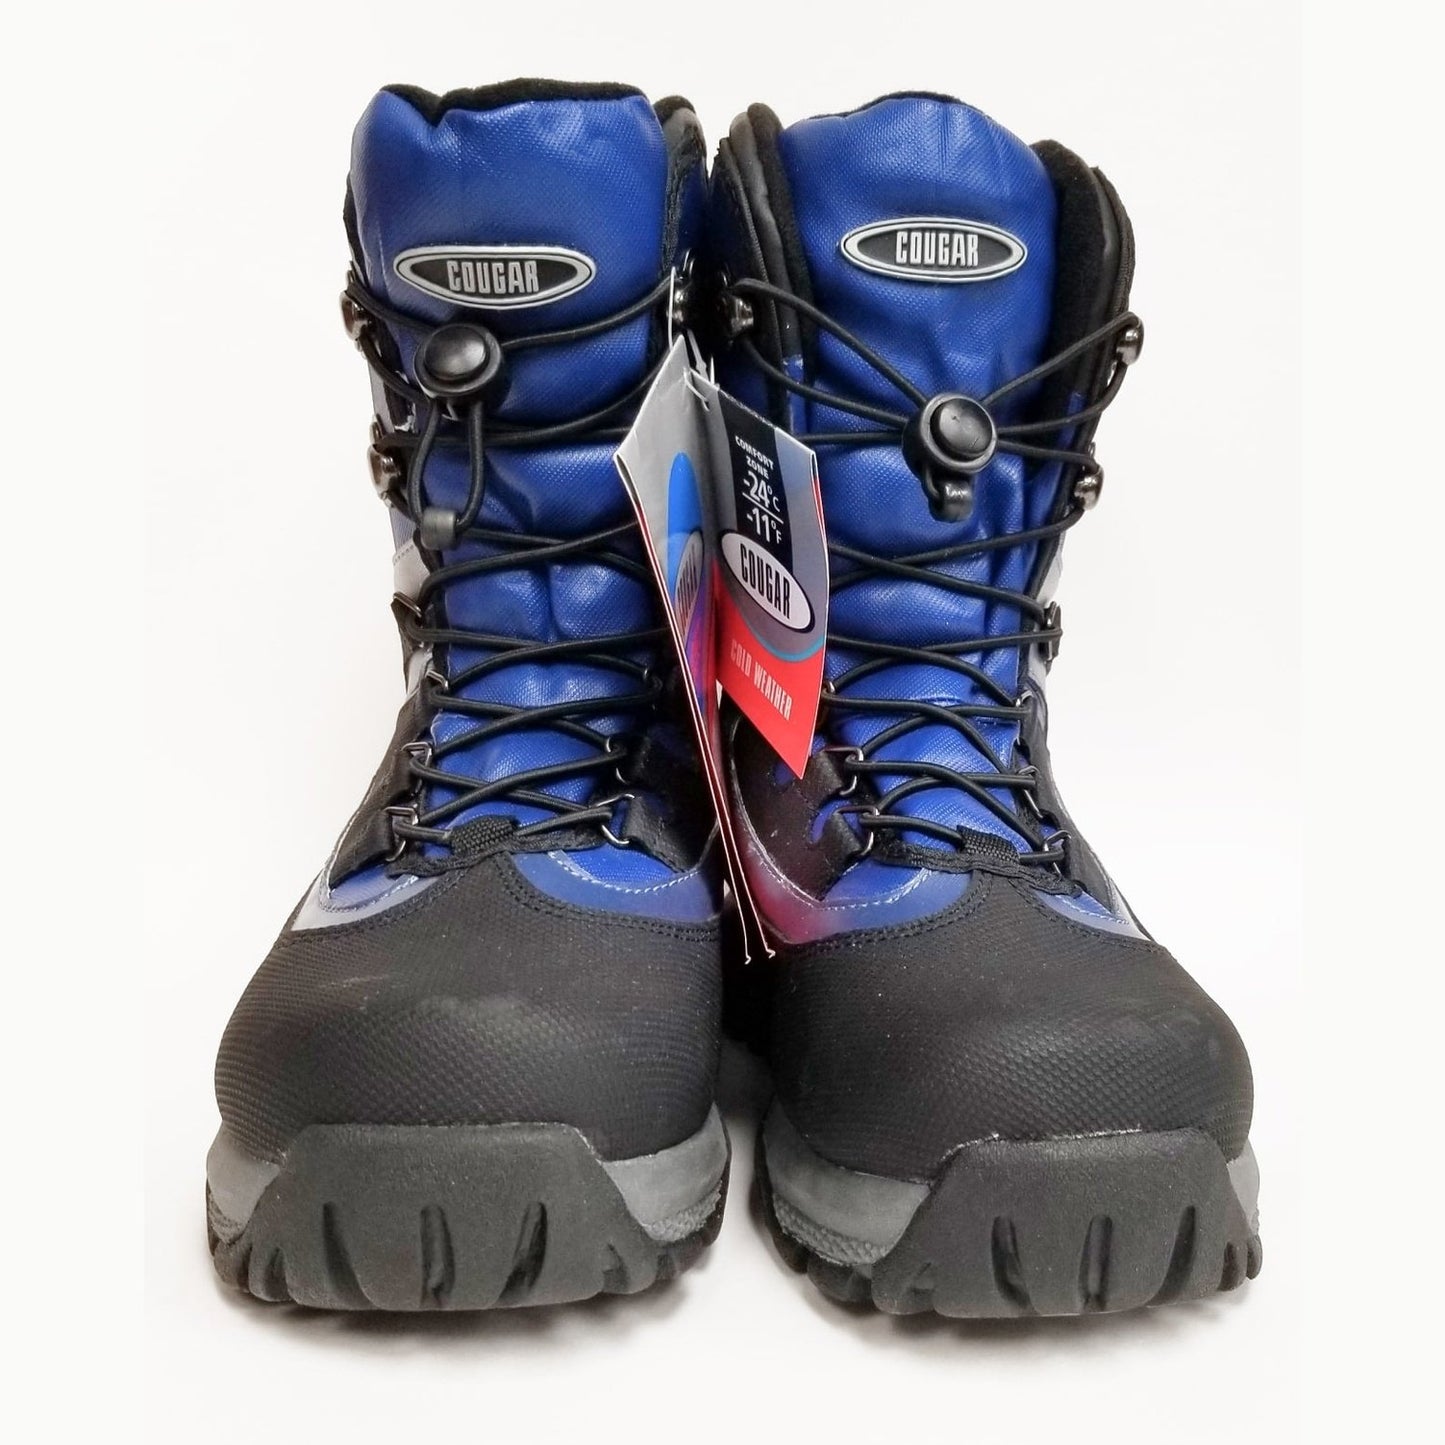 Cougar Boys Winter Boots Strike Sport Waterproof Blue - Cougar Boots